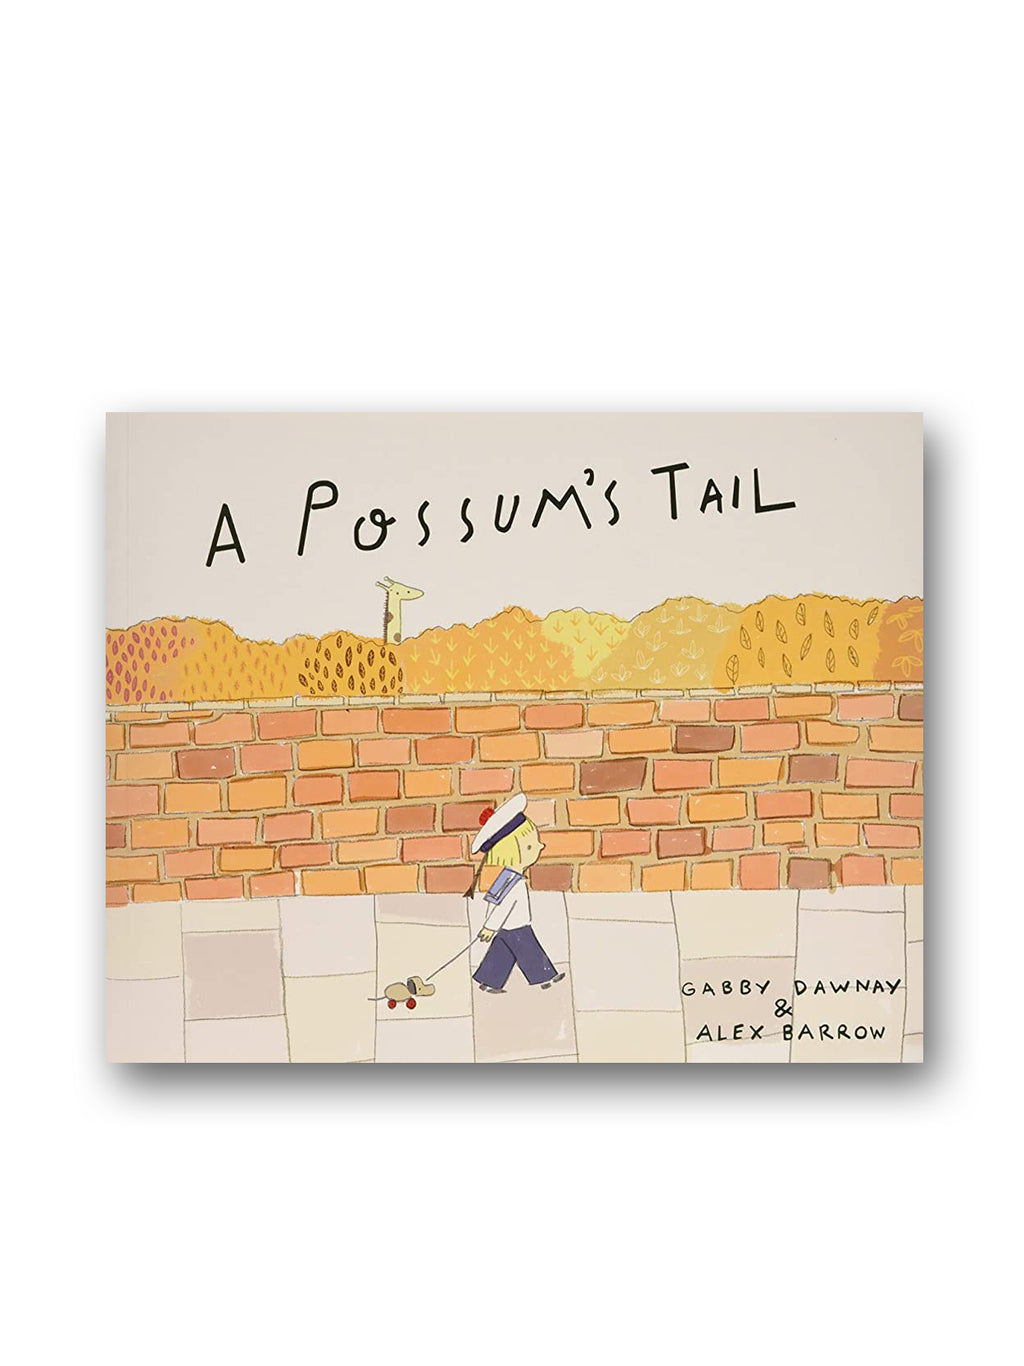 A Possum's Tail